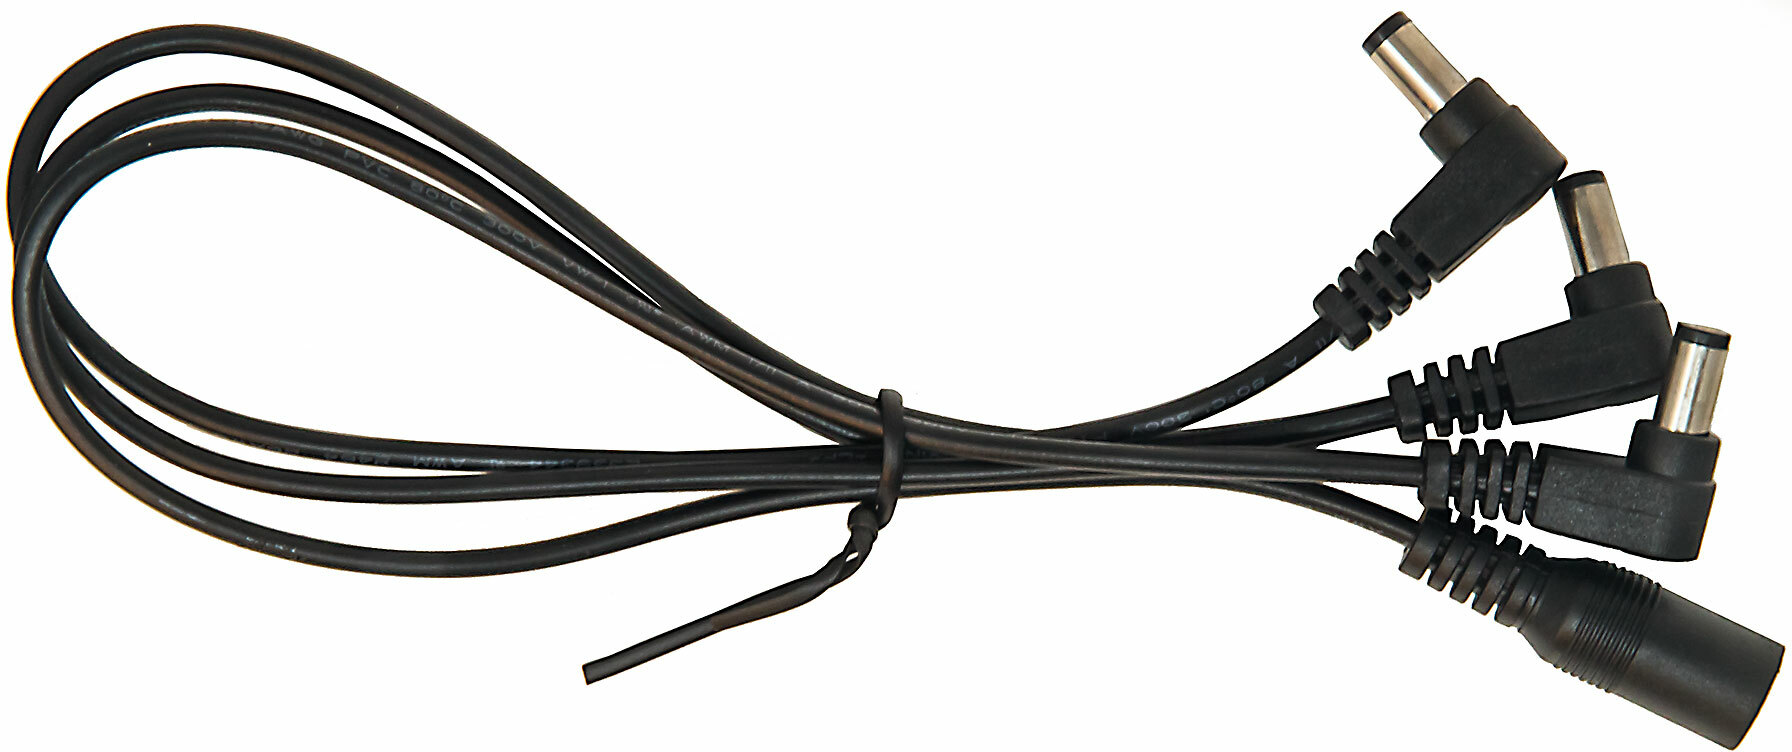 X-tone 3-way Chain Cable Alimentation Pedales - Adaptateur Connectique - Main picture